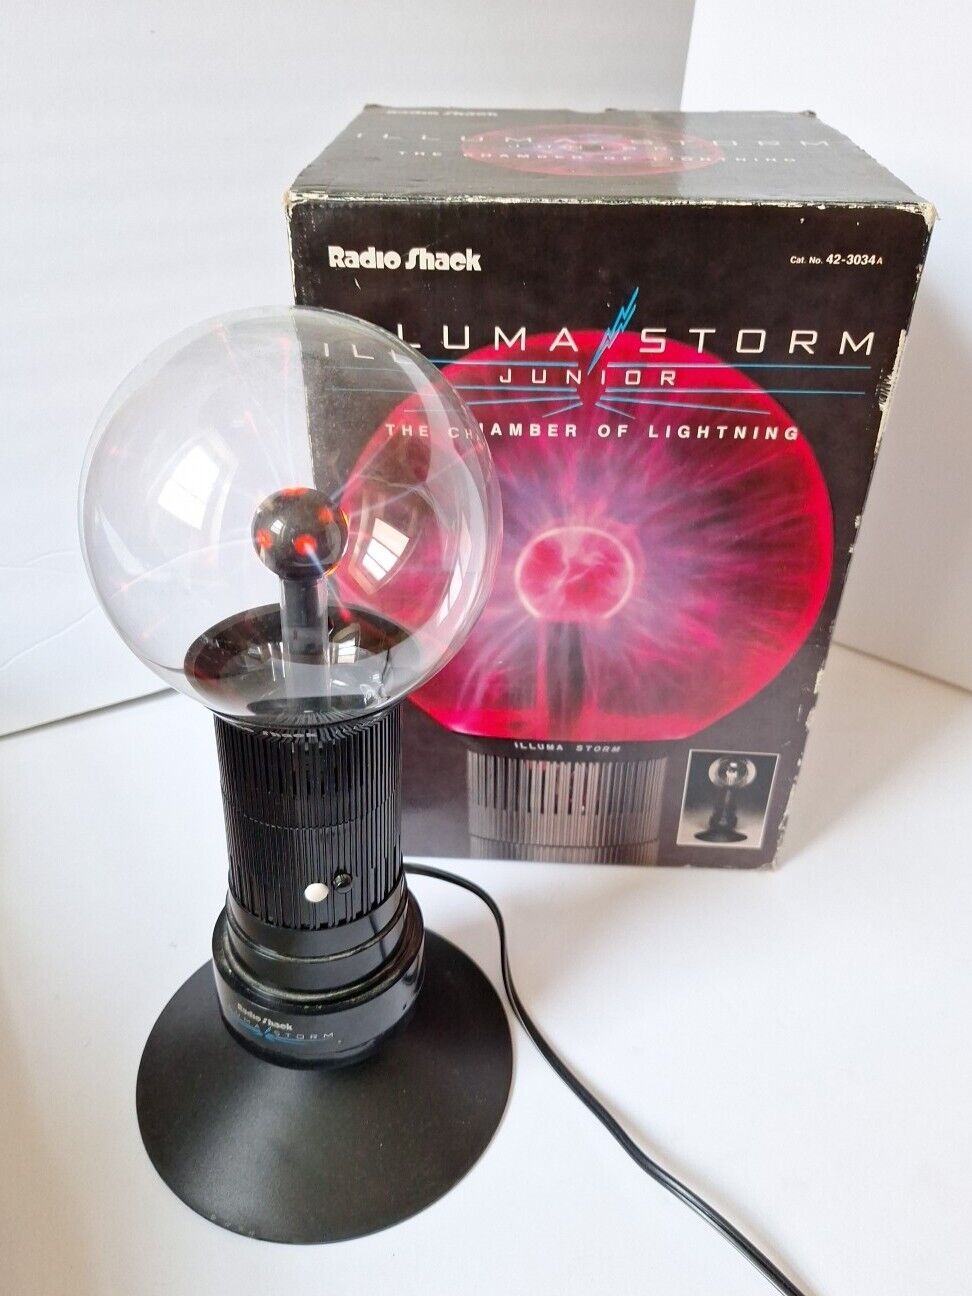 Vintage Realistic Illuma Storm Junior Plasma Globe, Original box, Cat No 42-3034